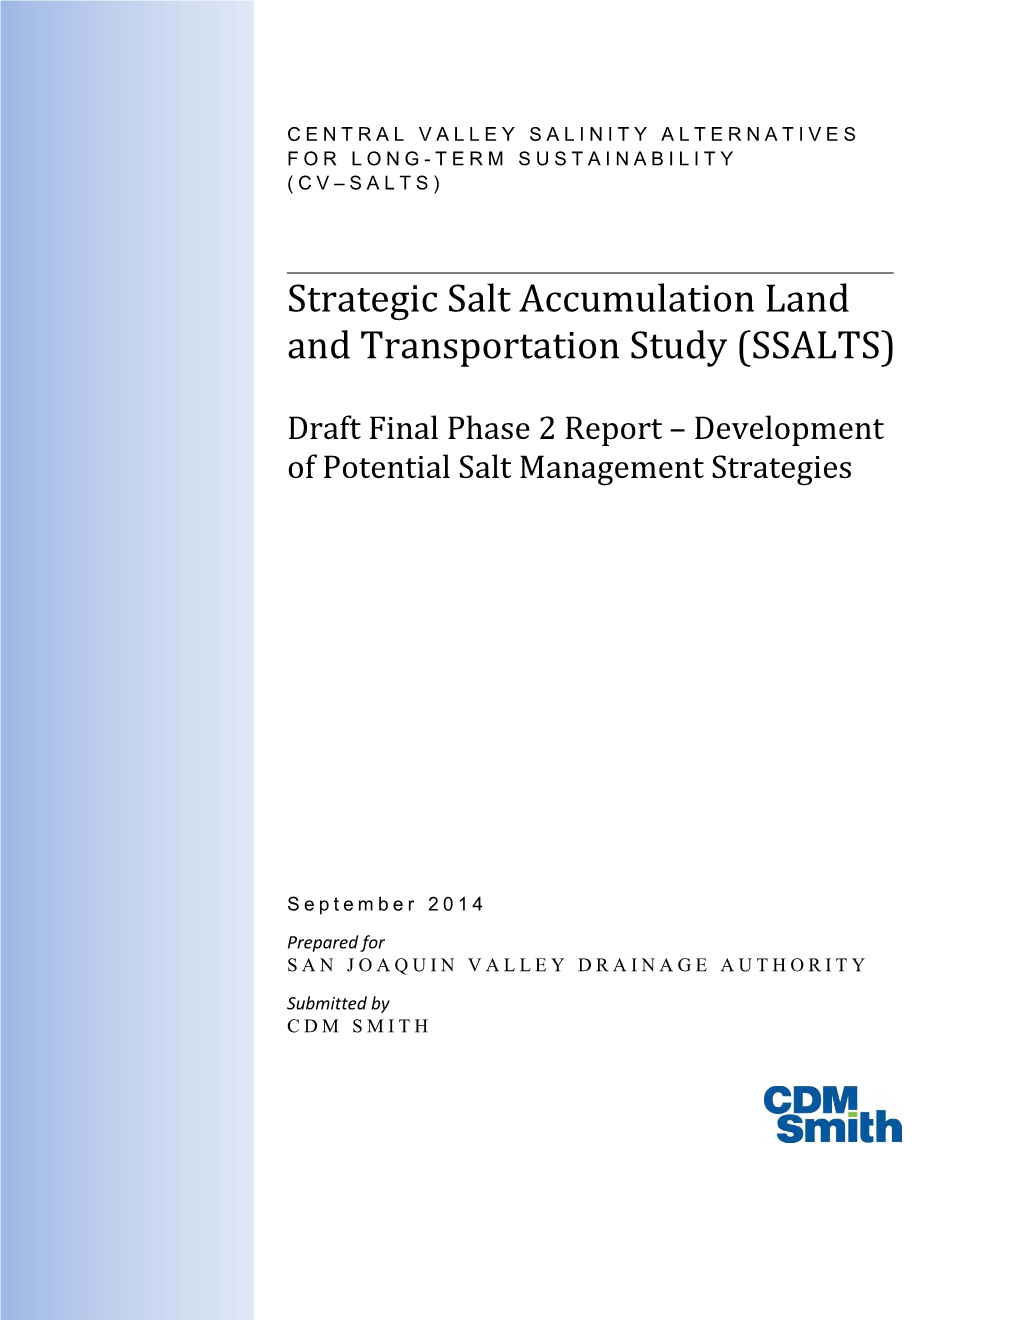 Draft Phase 2 Report – Development of Potential Salt